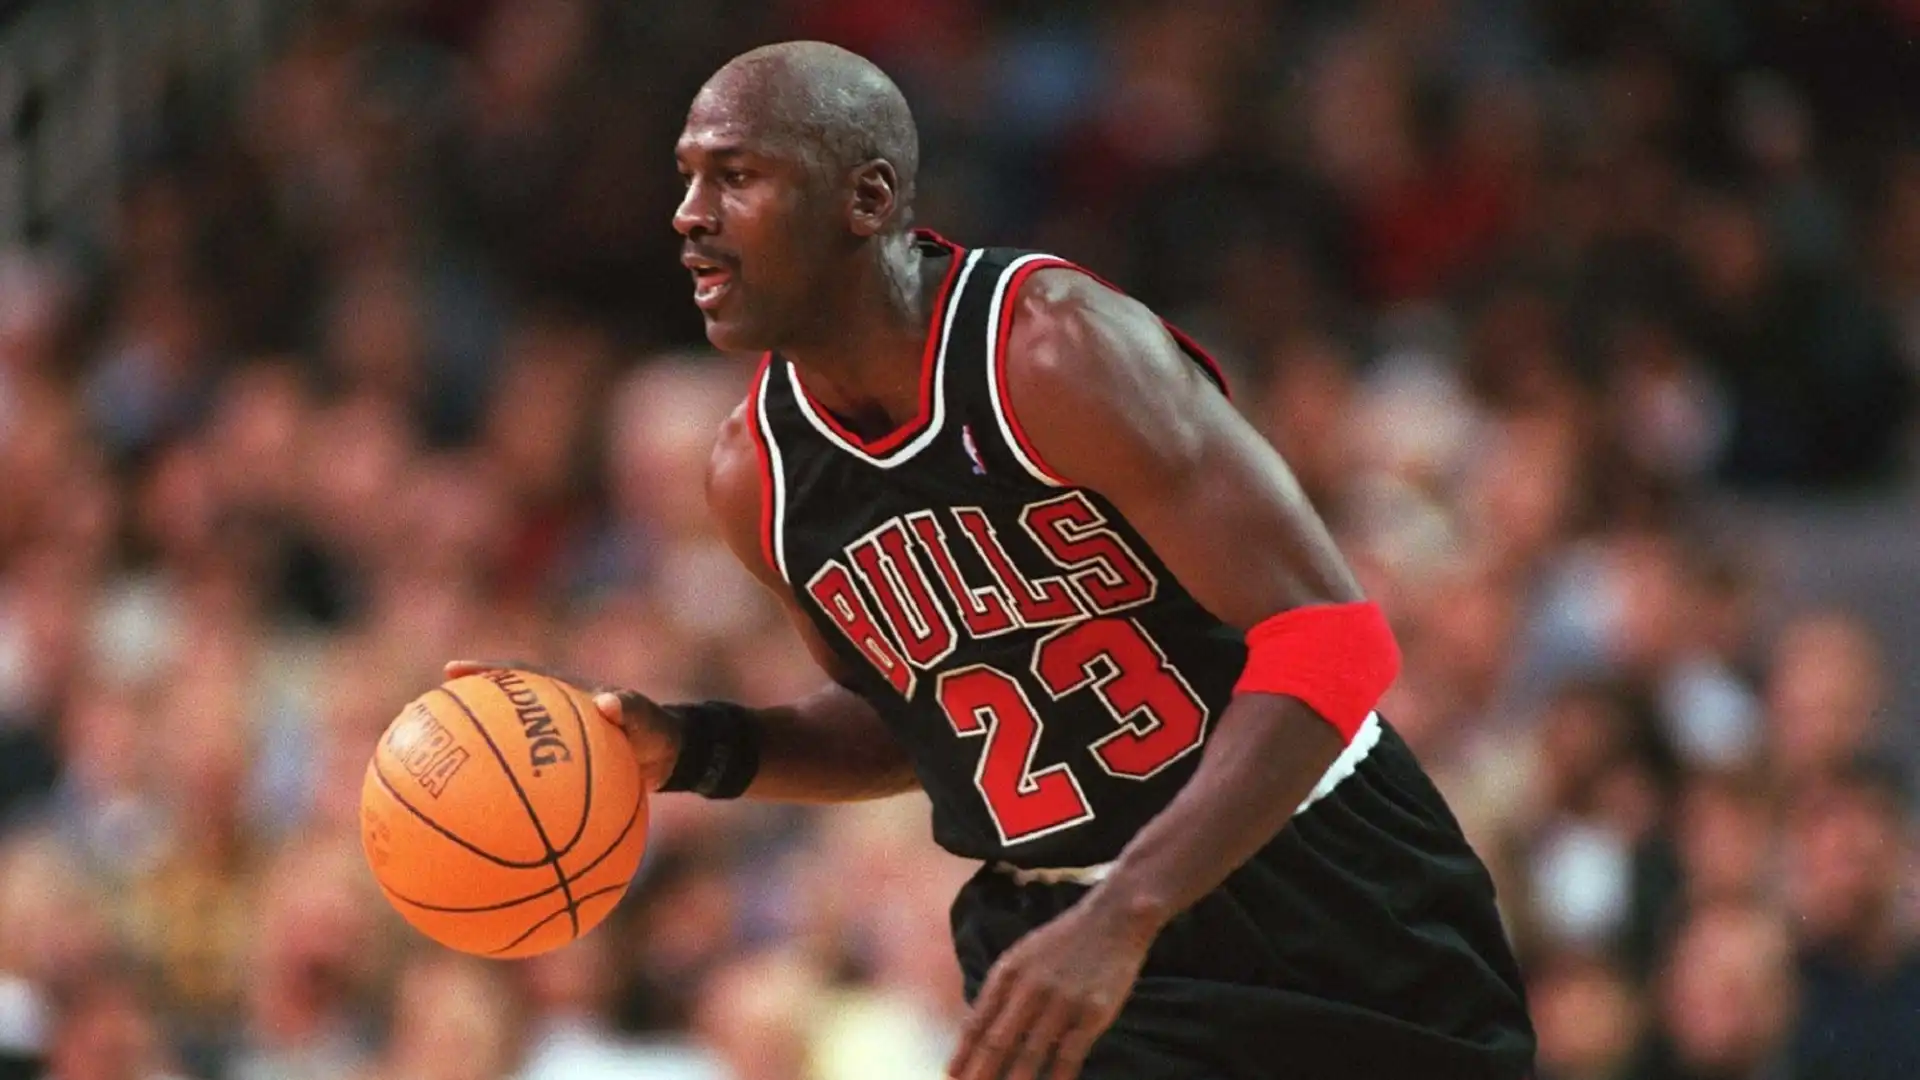 1997: Michael Jordan (basketball), guadagni totali stimati 78,3 milioni di dollari